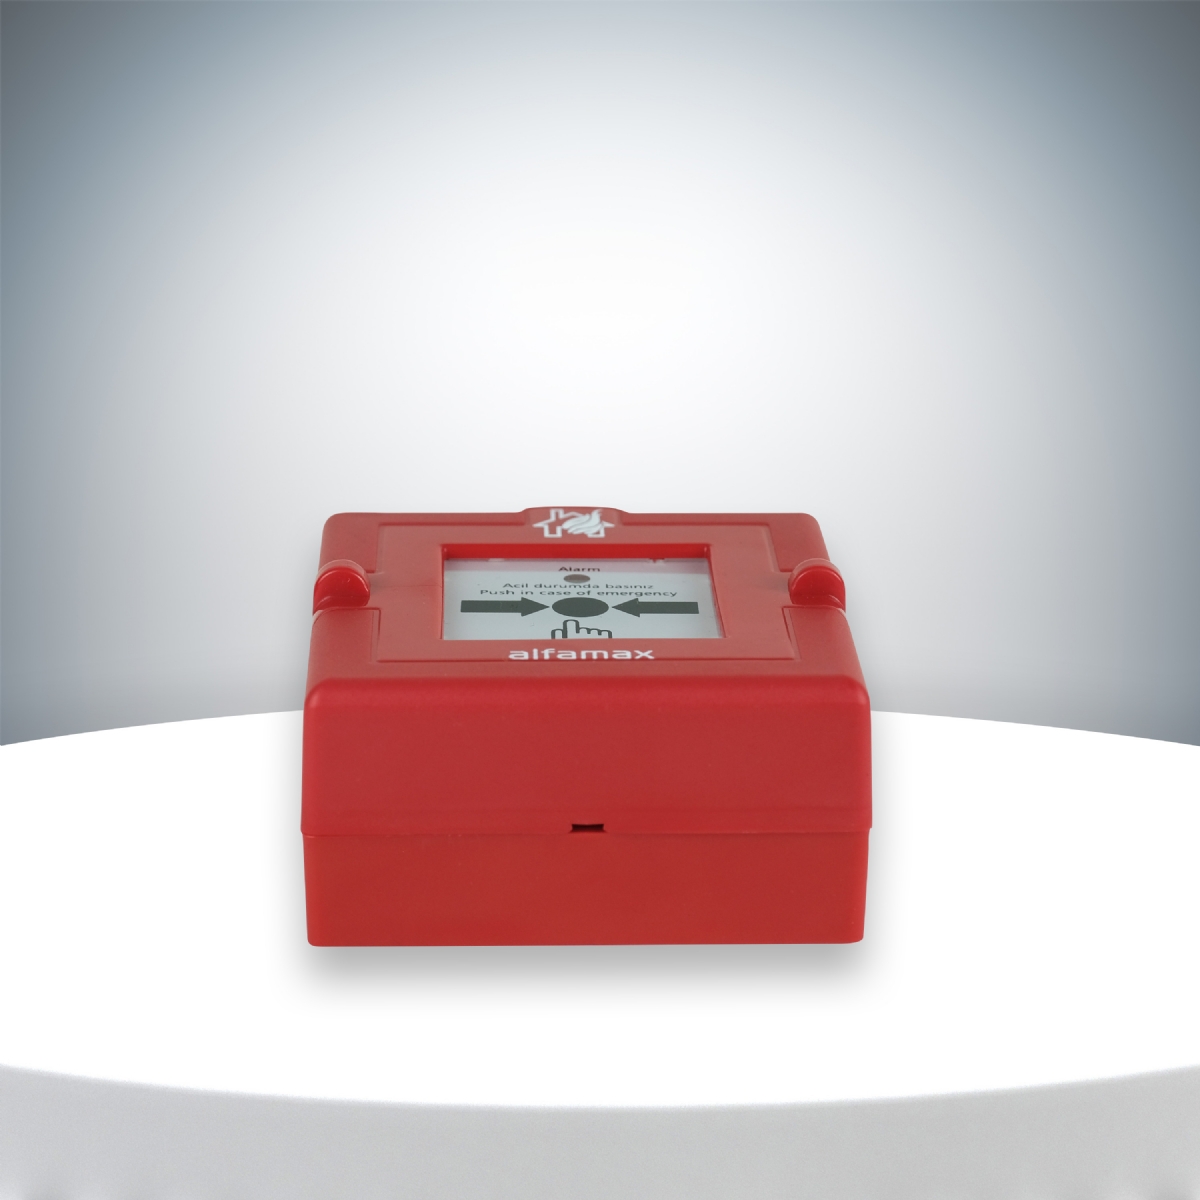 C-1005  Conventional Fire Alarm Button